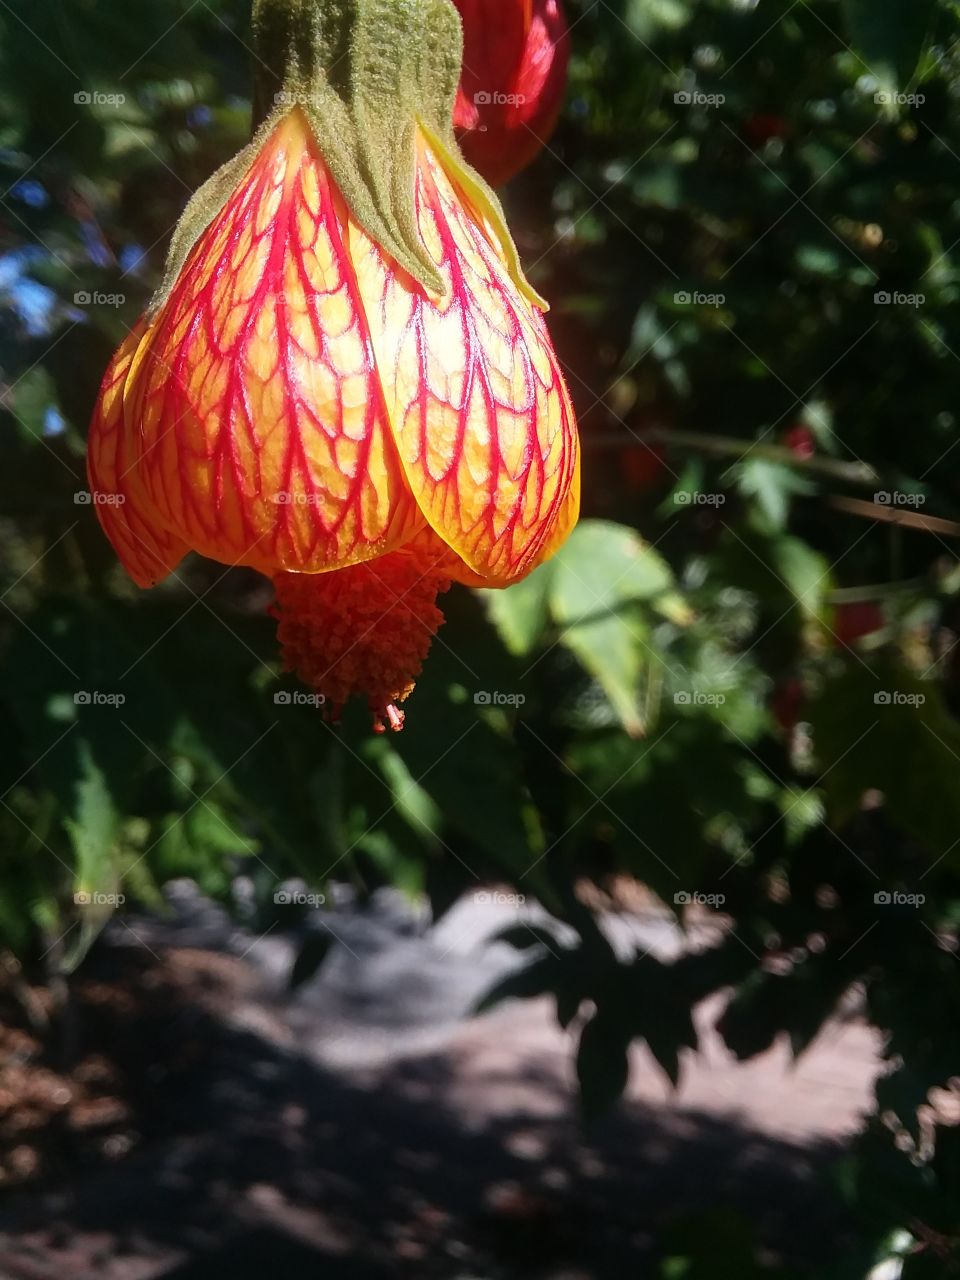 A Vibrant orange hanging bell-like flower.